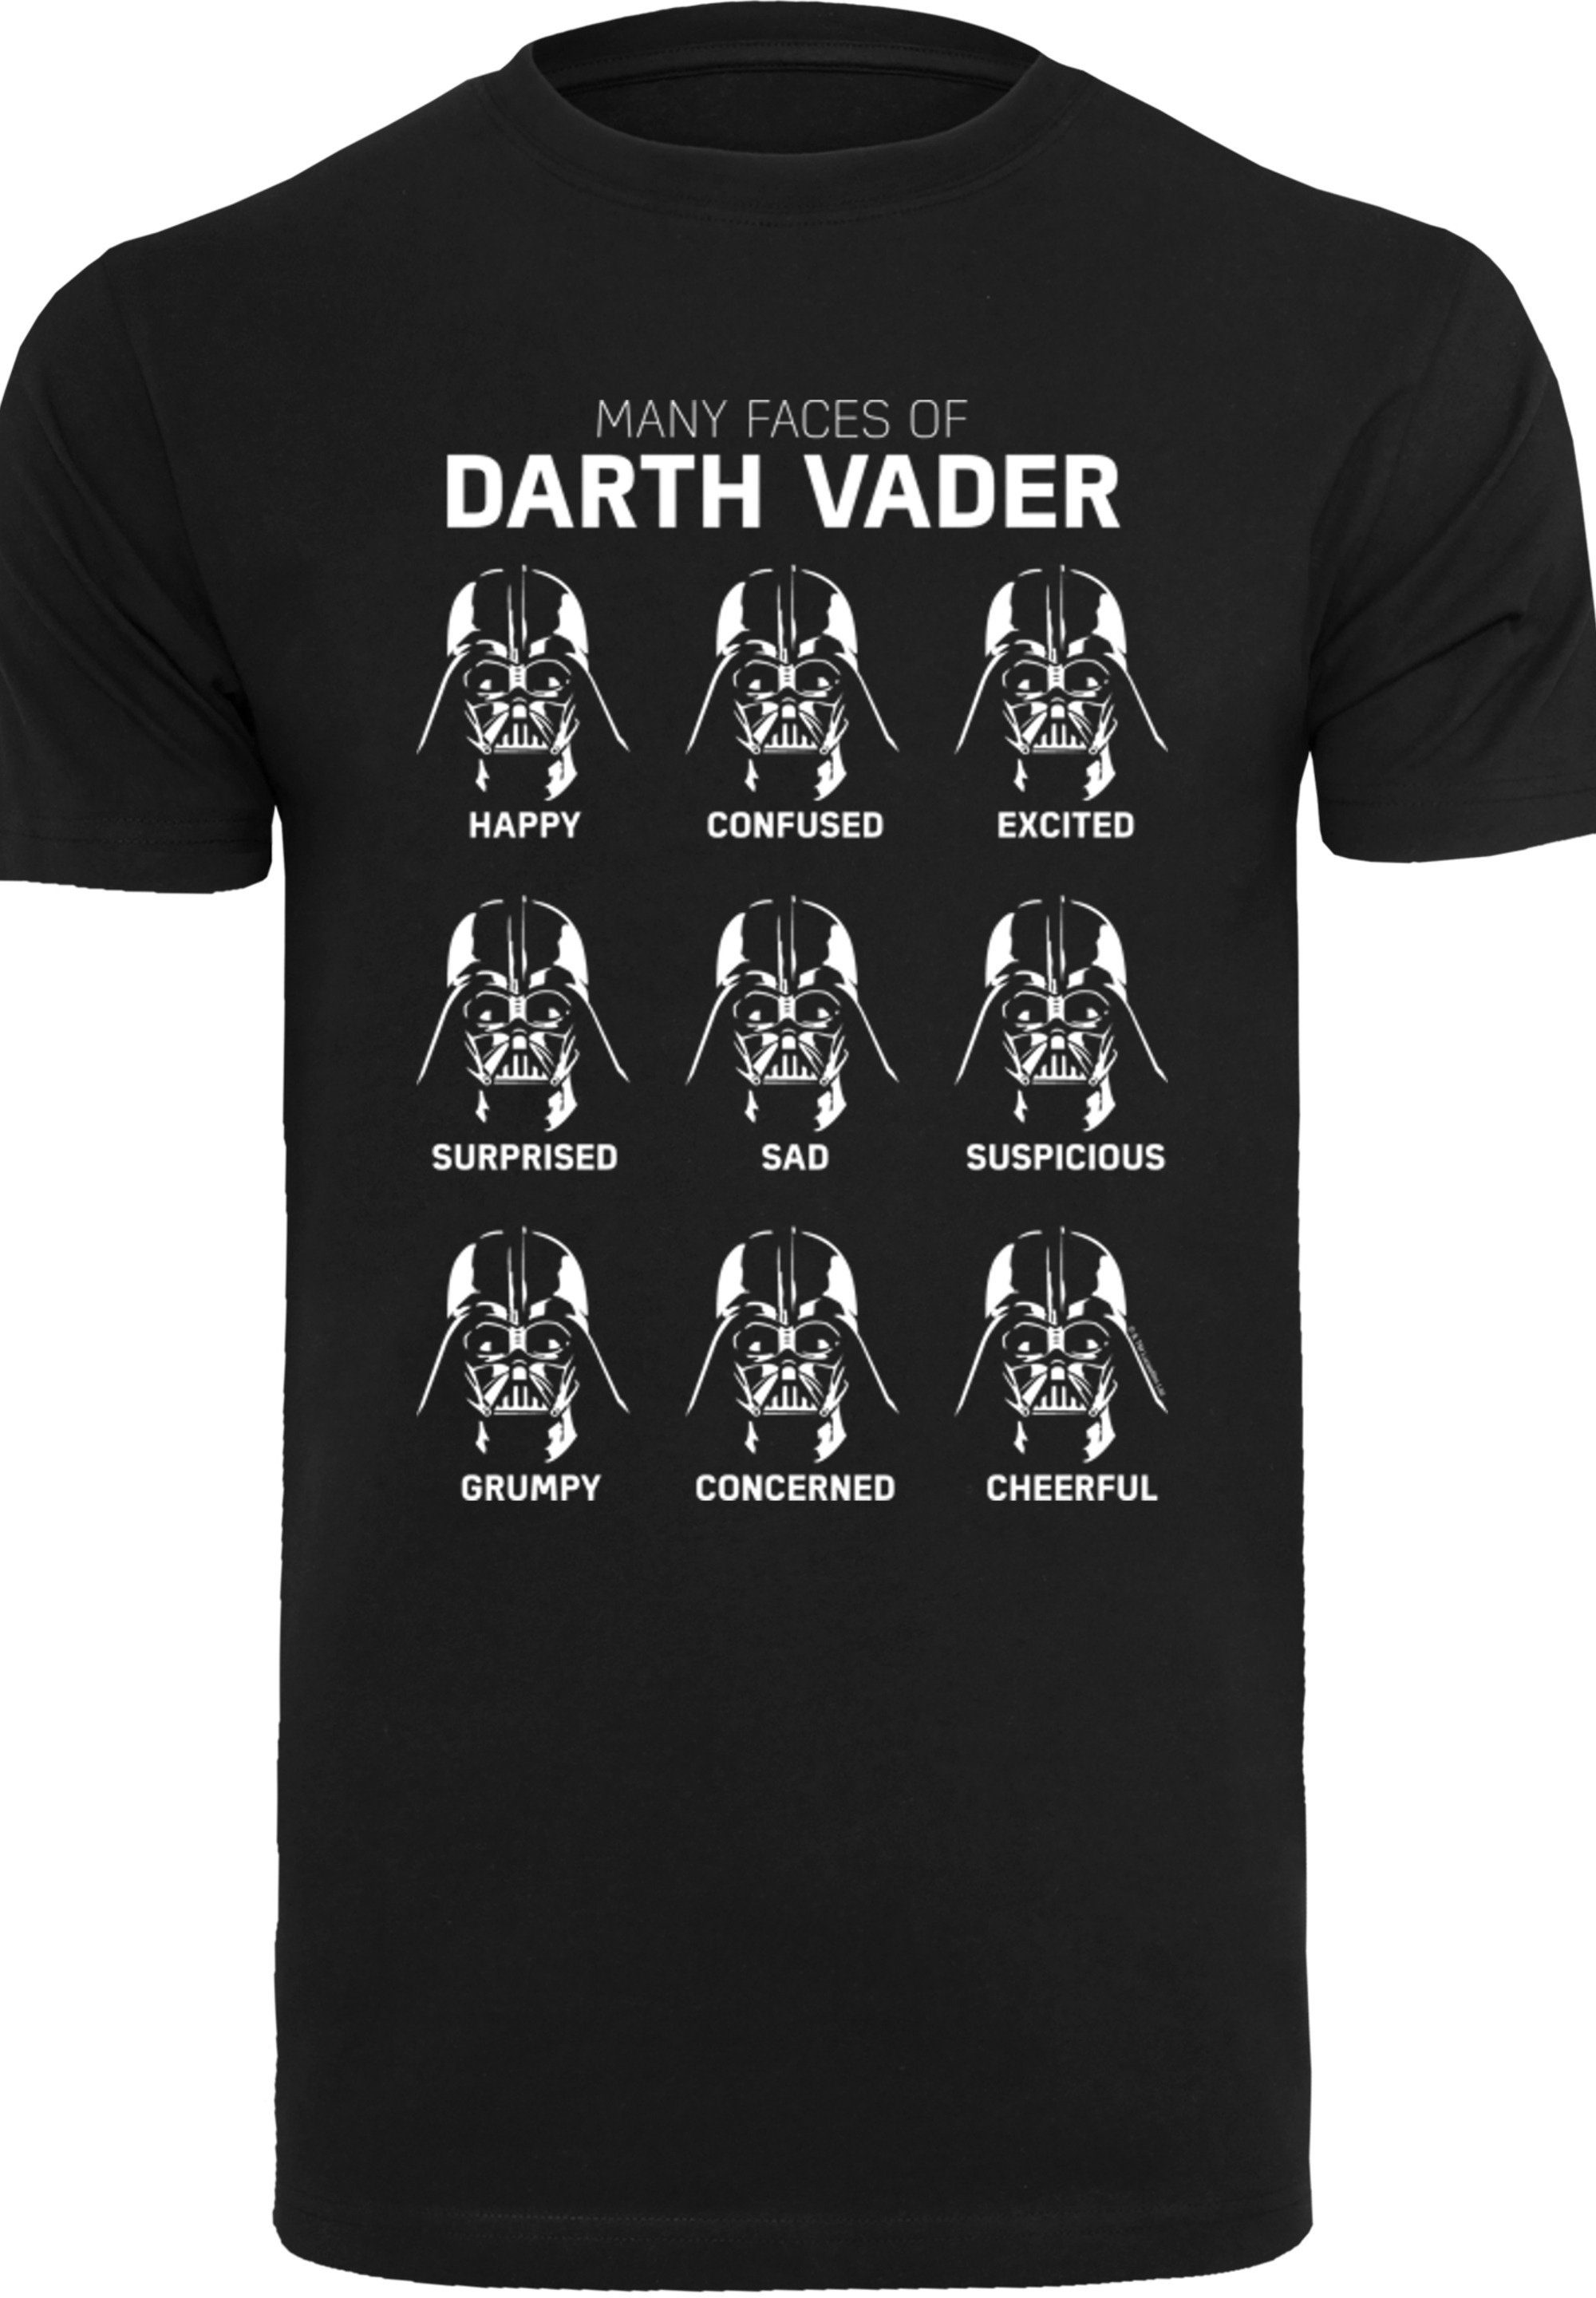 F4NT4STIC T-Shirt Star Wars Darth Vader s Of Many The Print